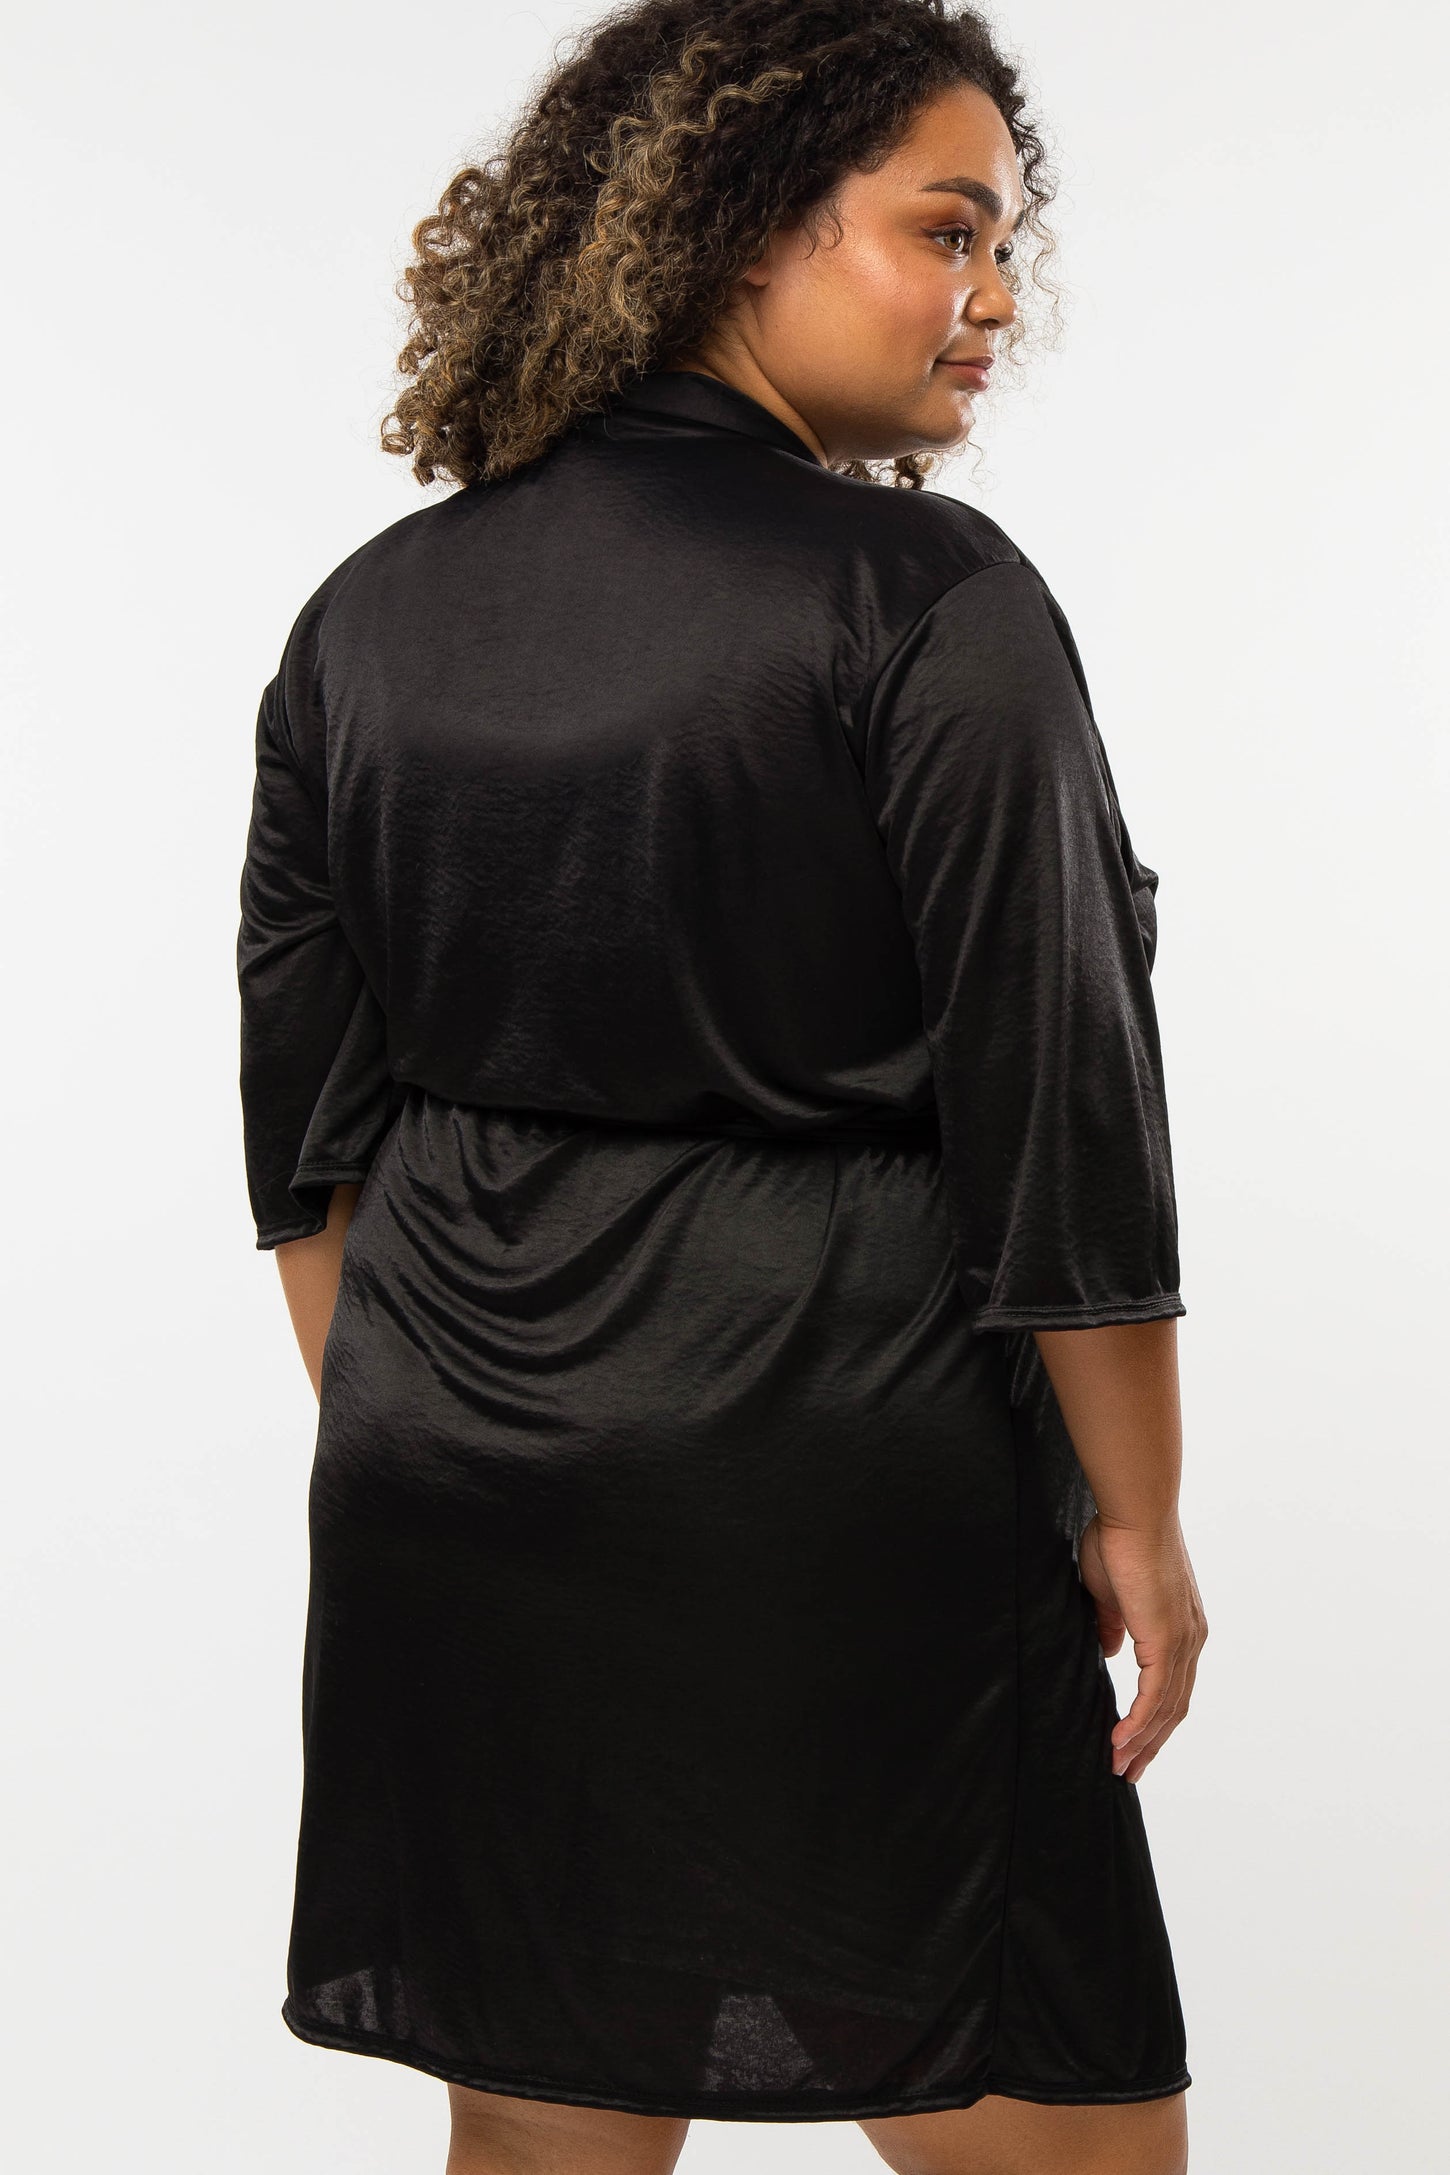 Black Stretch Satin Delivery/Nursing Maternity Plus Robe